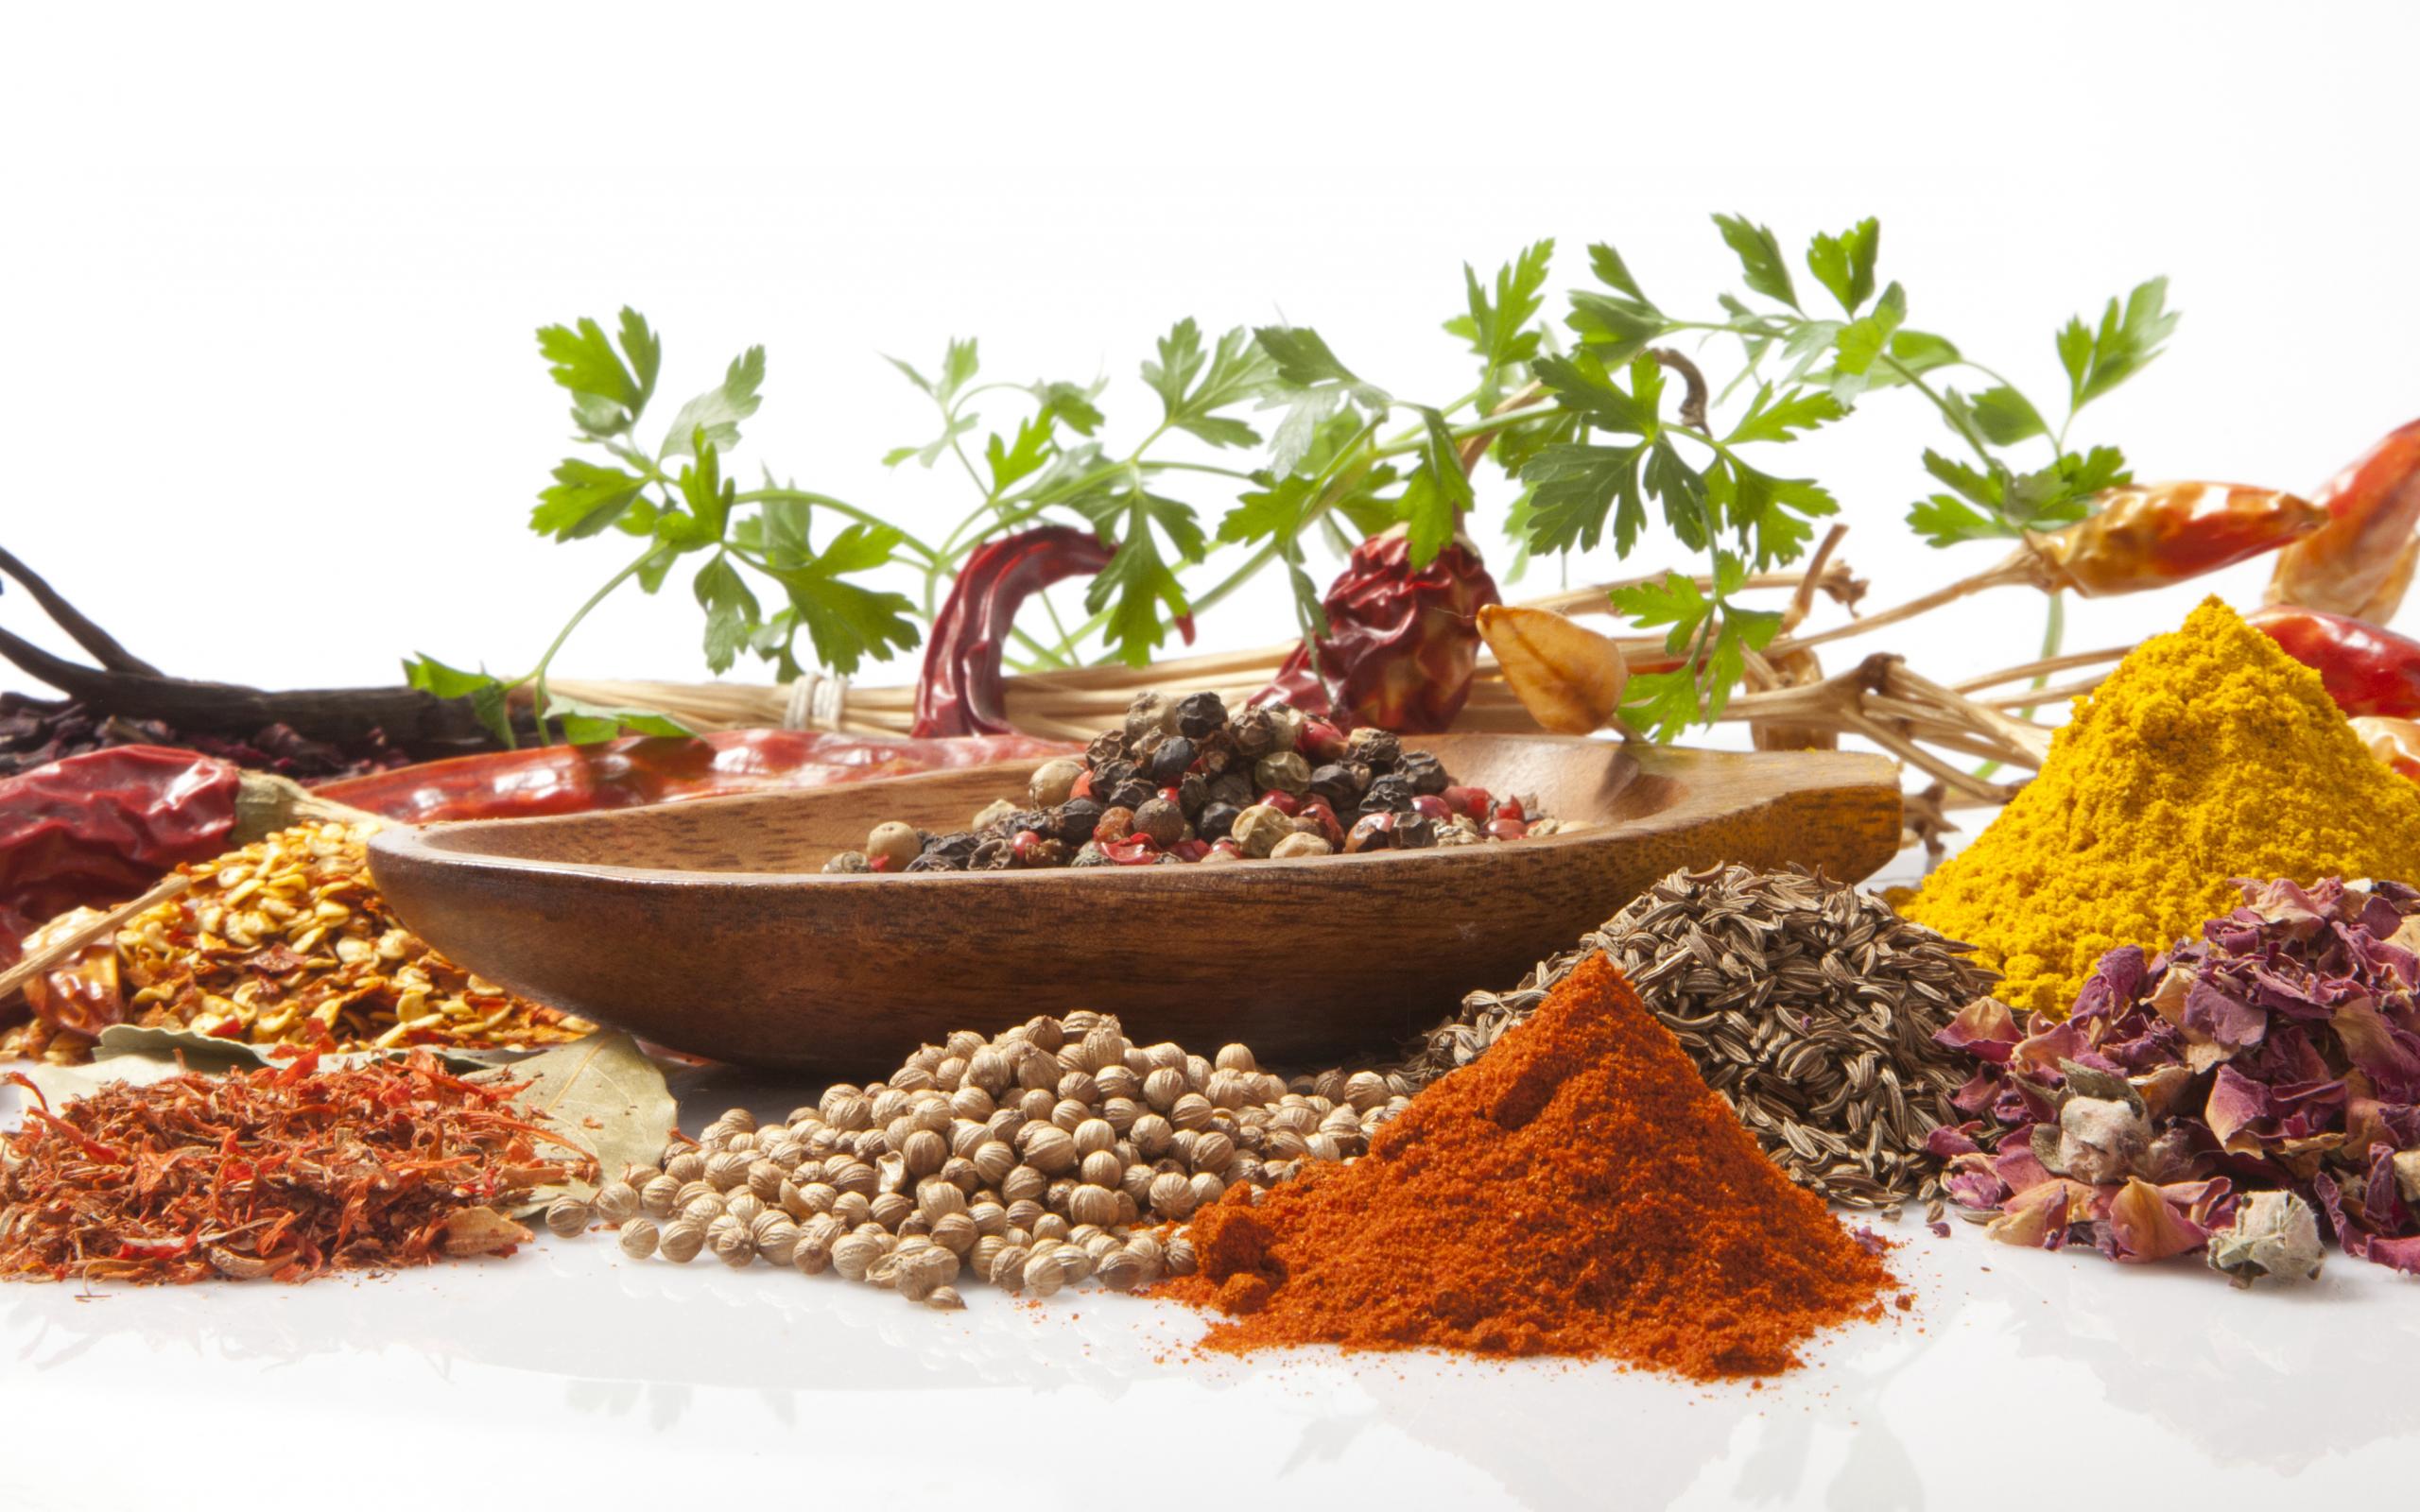 herb wallpaper,natural foods,baharat,garam masala,spice mix,chili powder